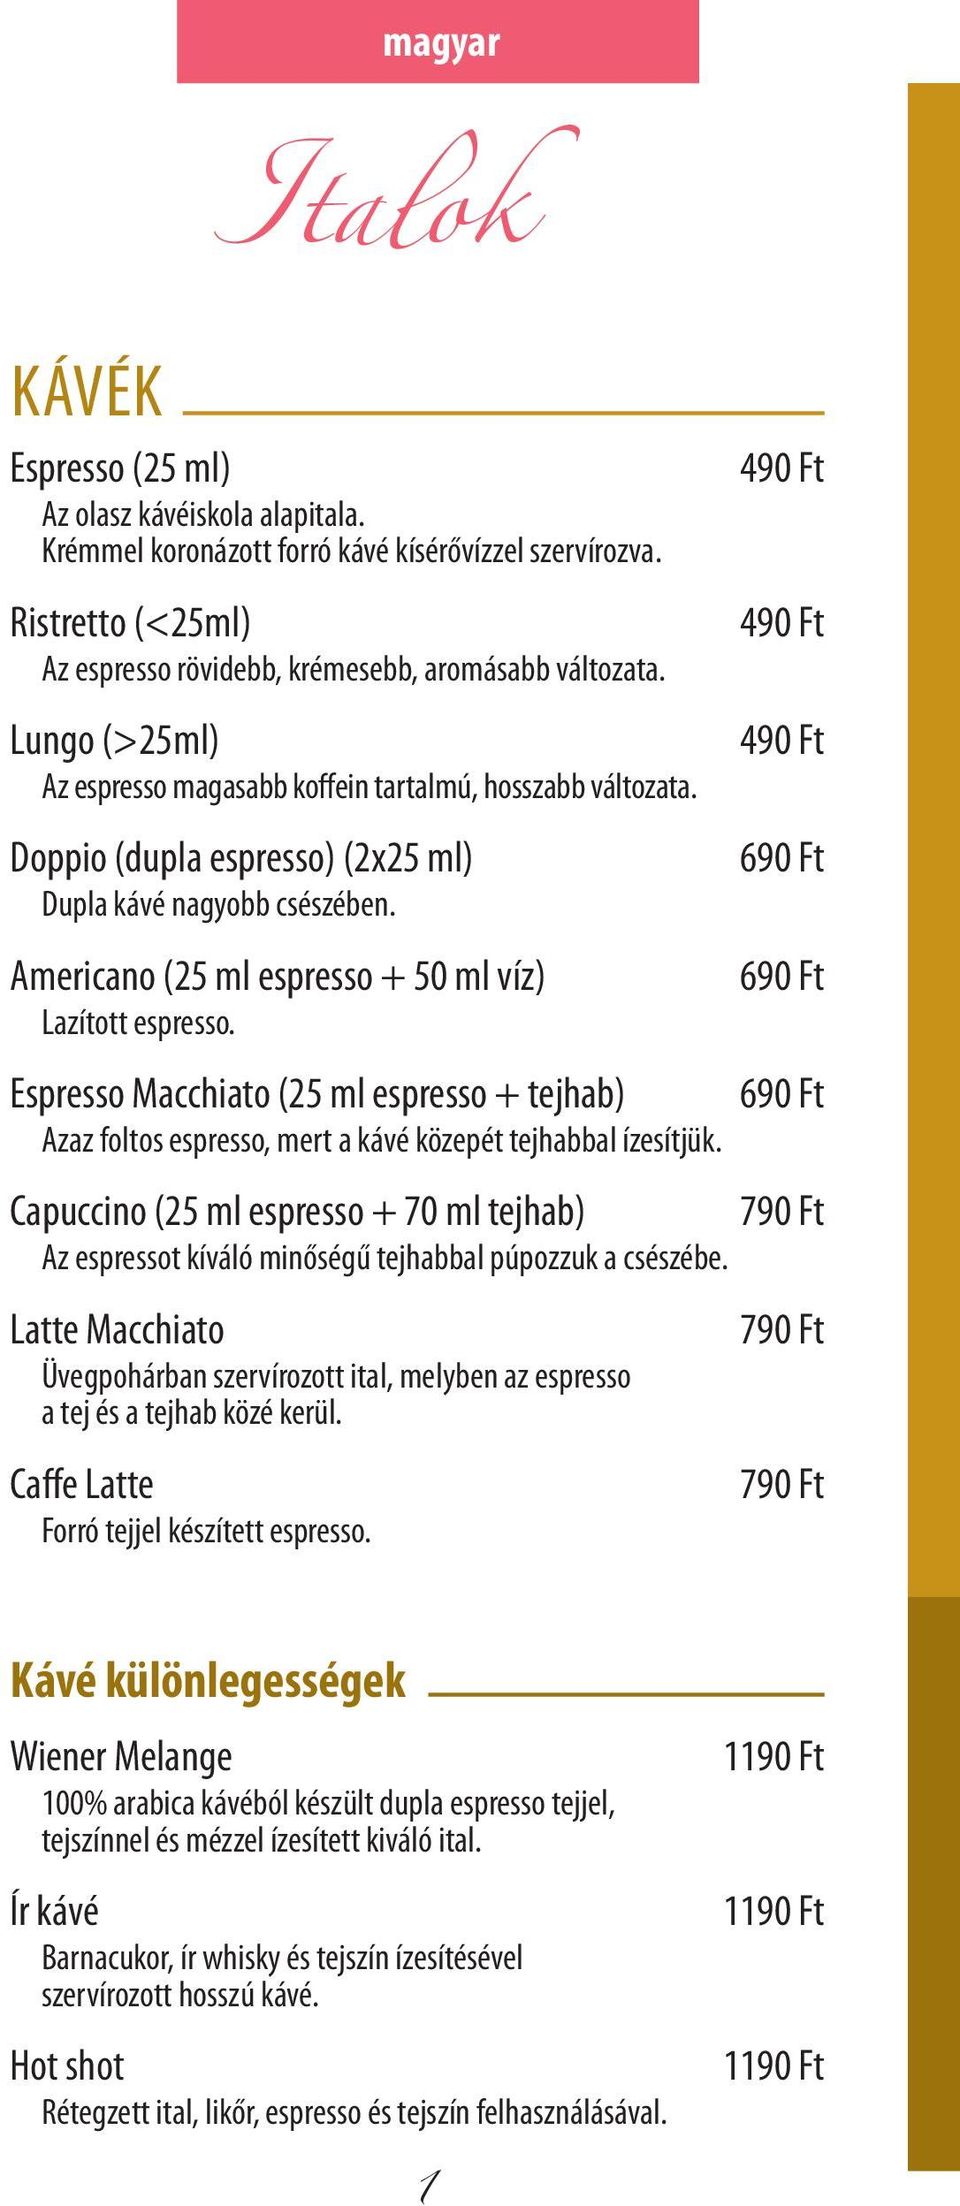 Espresso Macchiato (25 ml espresso + tejhab) Azaz foltos espresso, mert a kávé közepét tejhabbal ízesítjük.